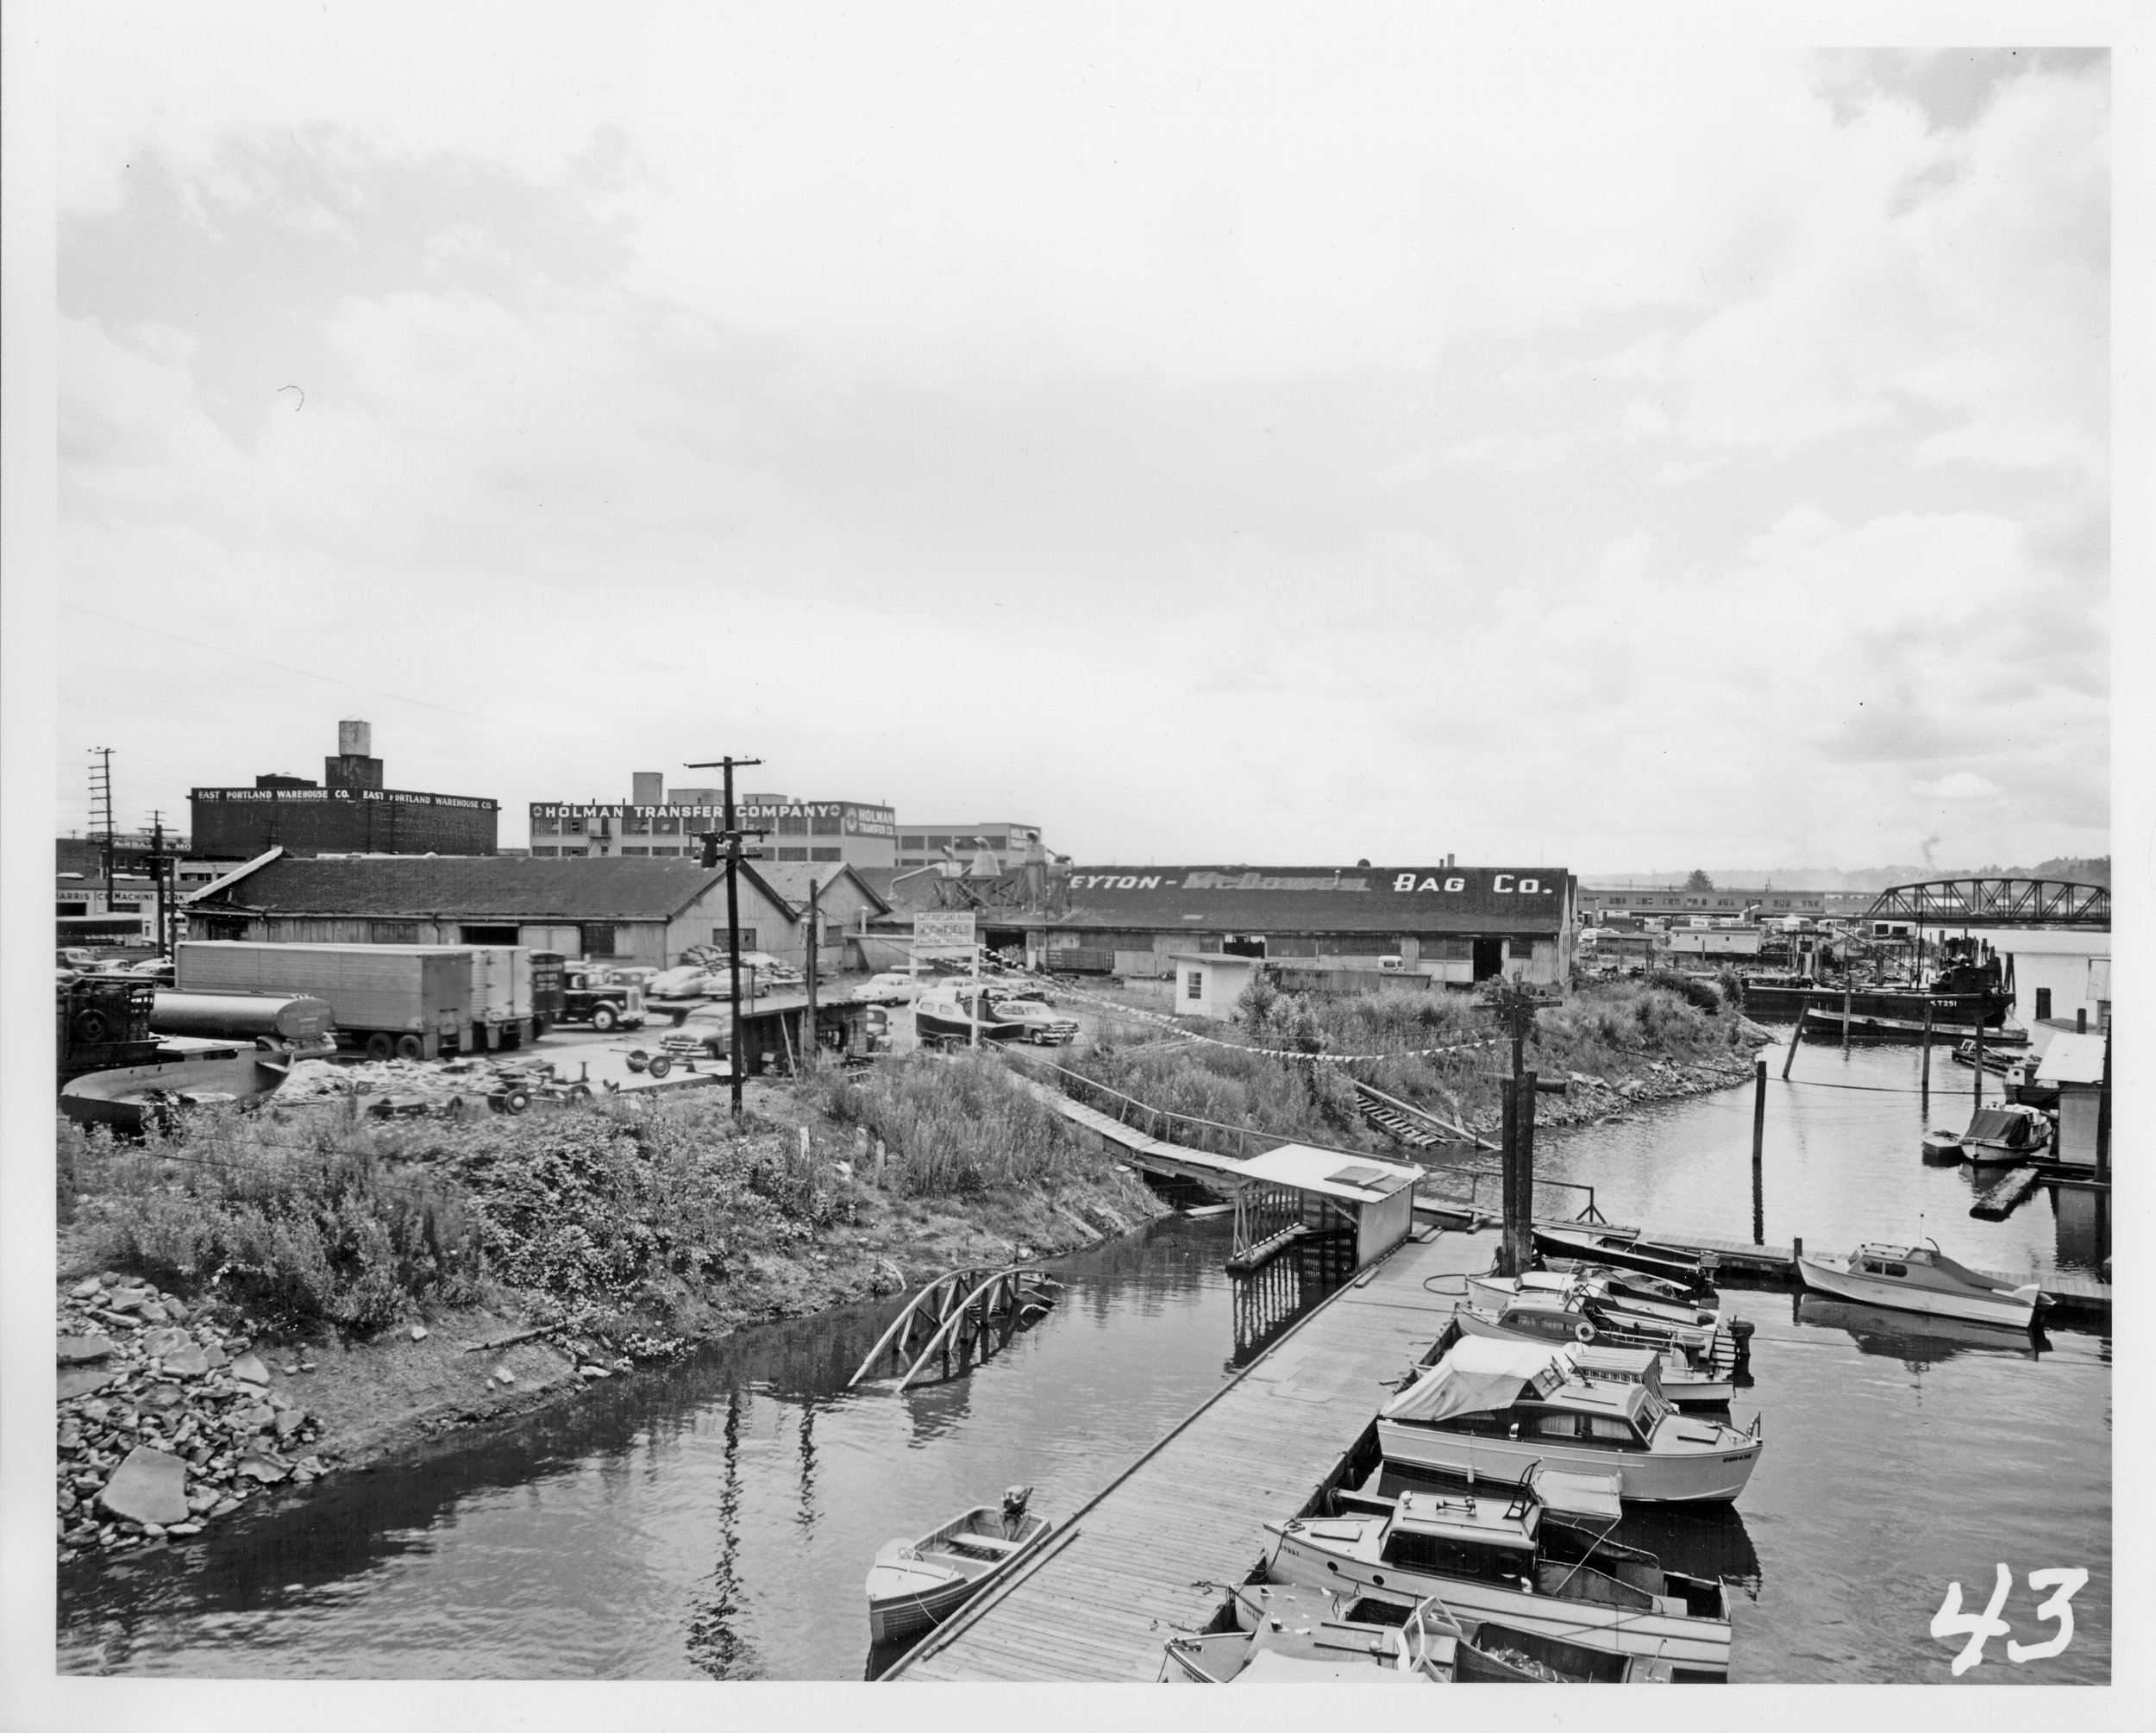 multno-co southeast waterfront between the Morrison Bridge and the Hawthorne Bridge, looking south, 1955..jpg